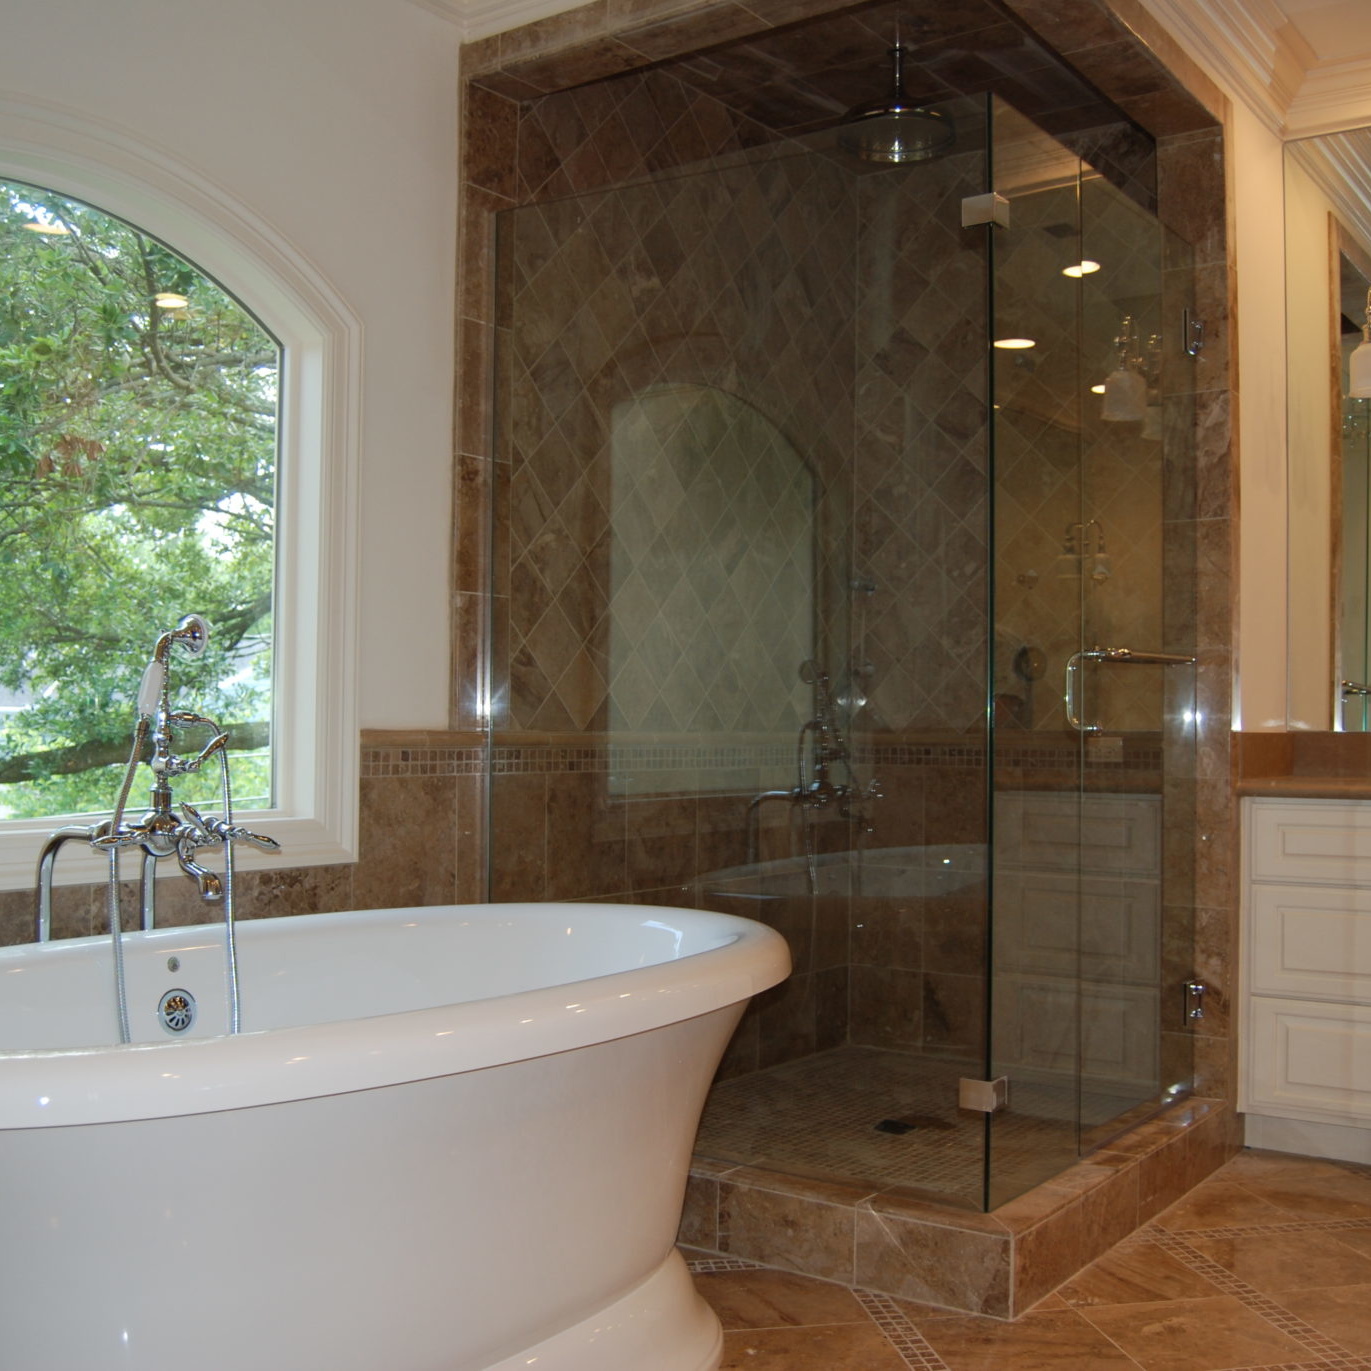 Bathroom interior design with large tub